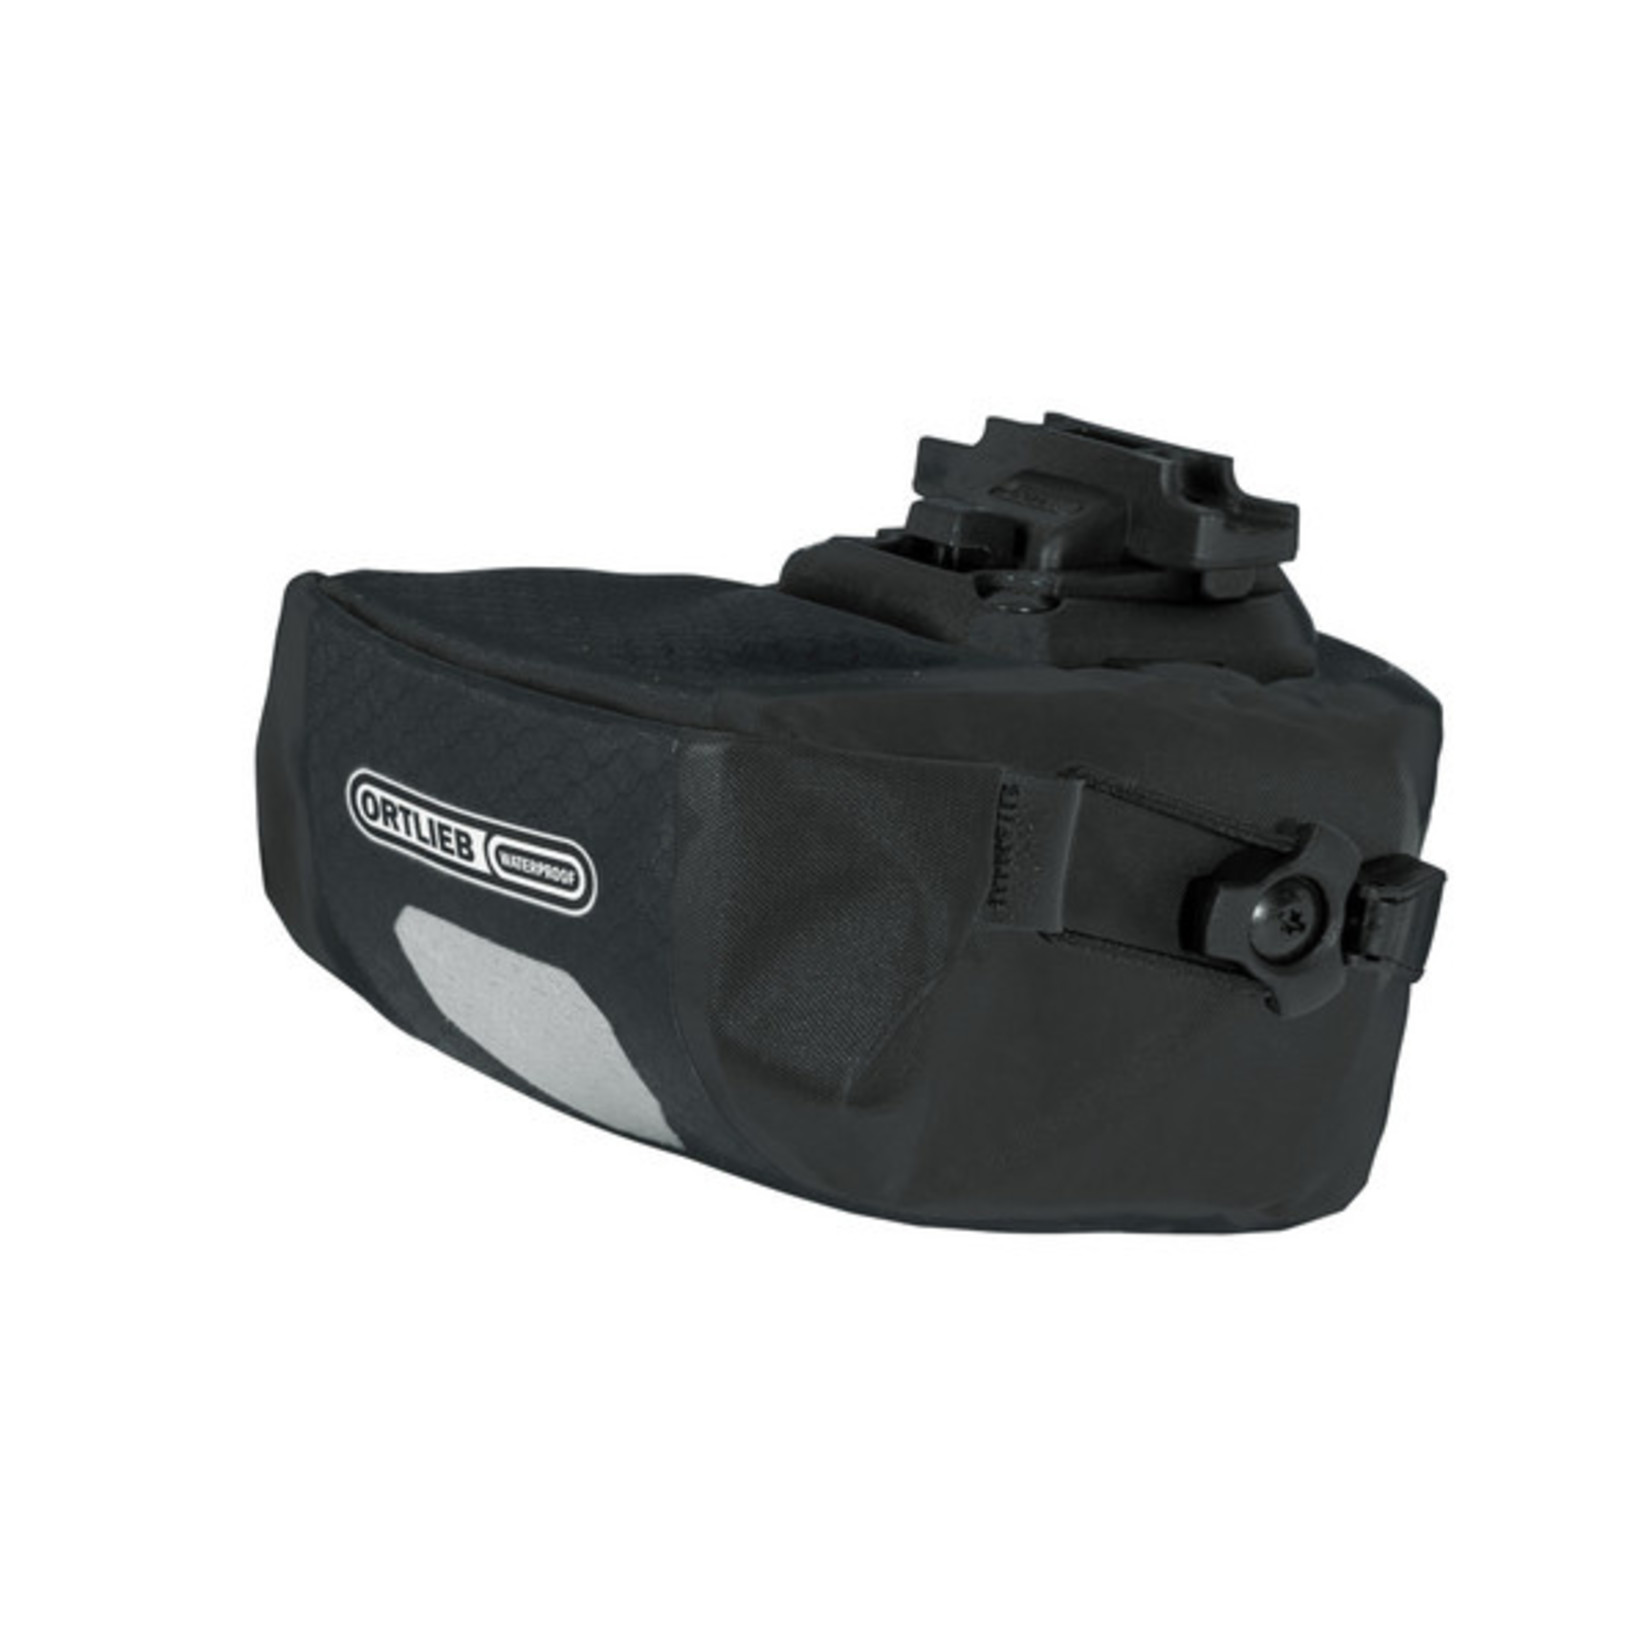 Ortlieb New Ortlieb Saddle-Bag Micro - Two Black Matt F9674 PVC-Free, Nylon Fabric